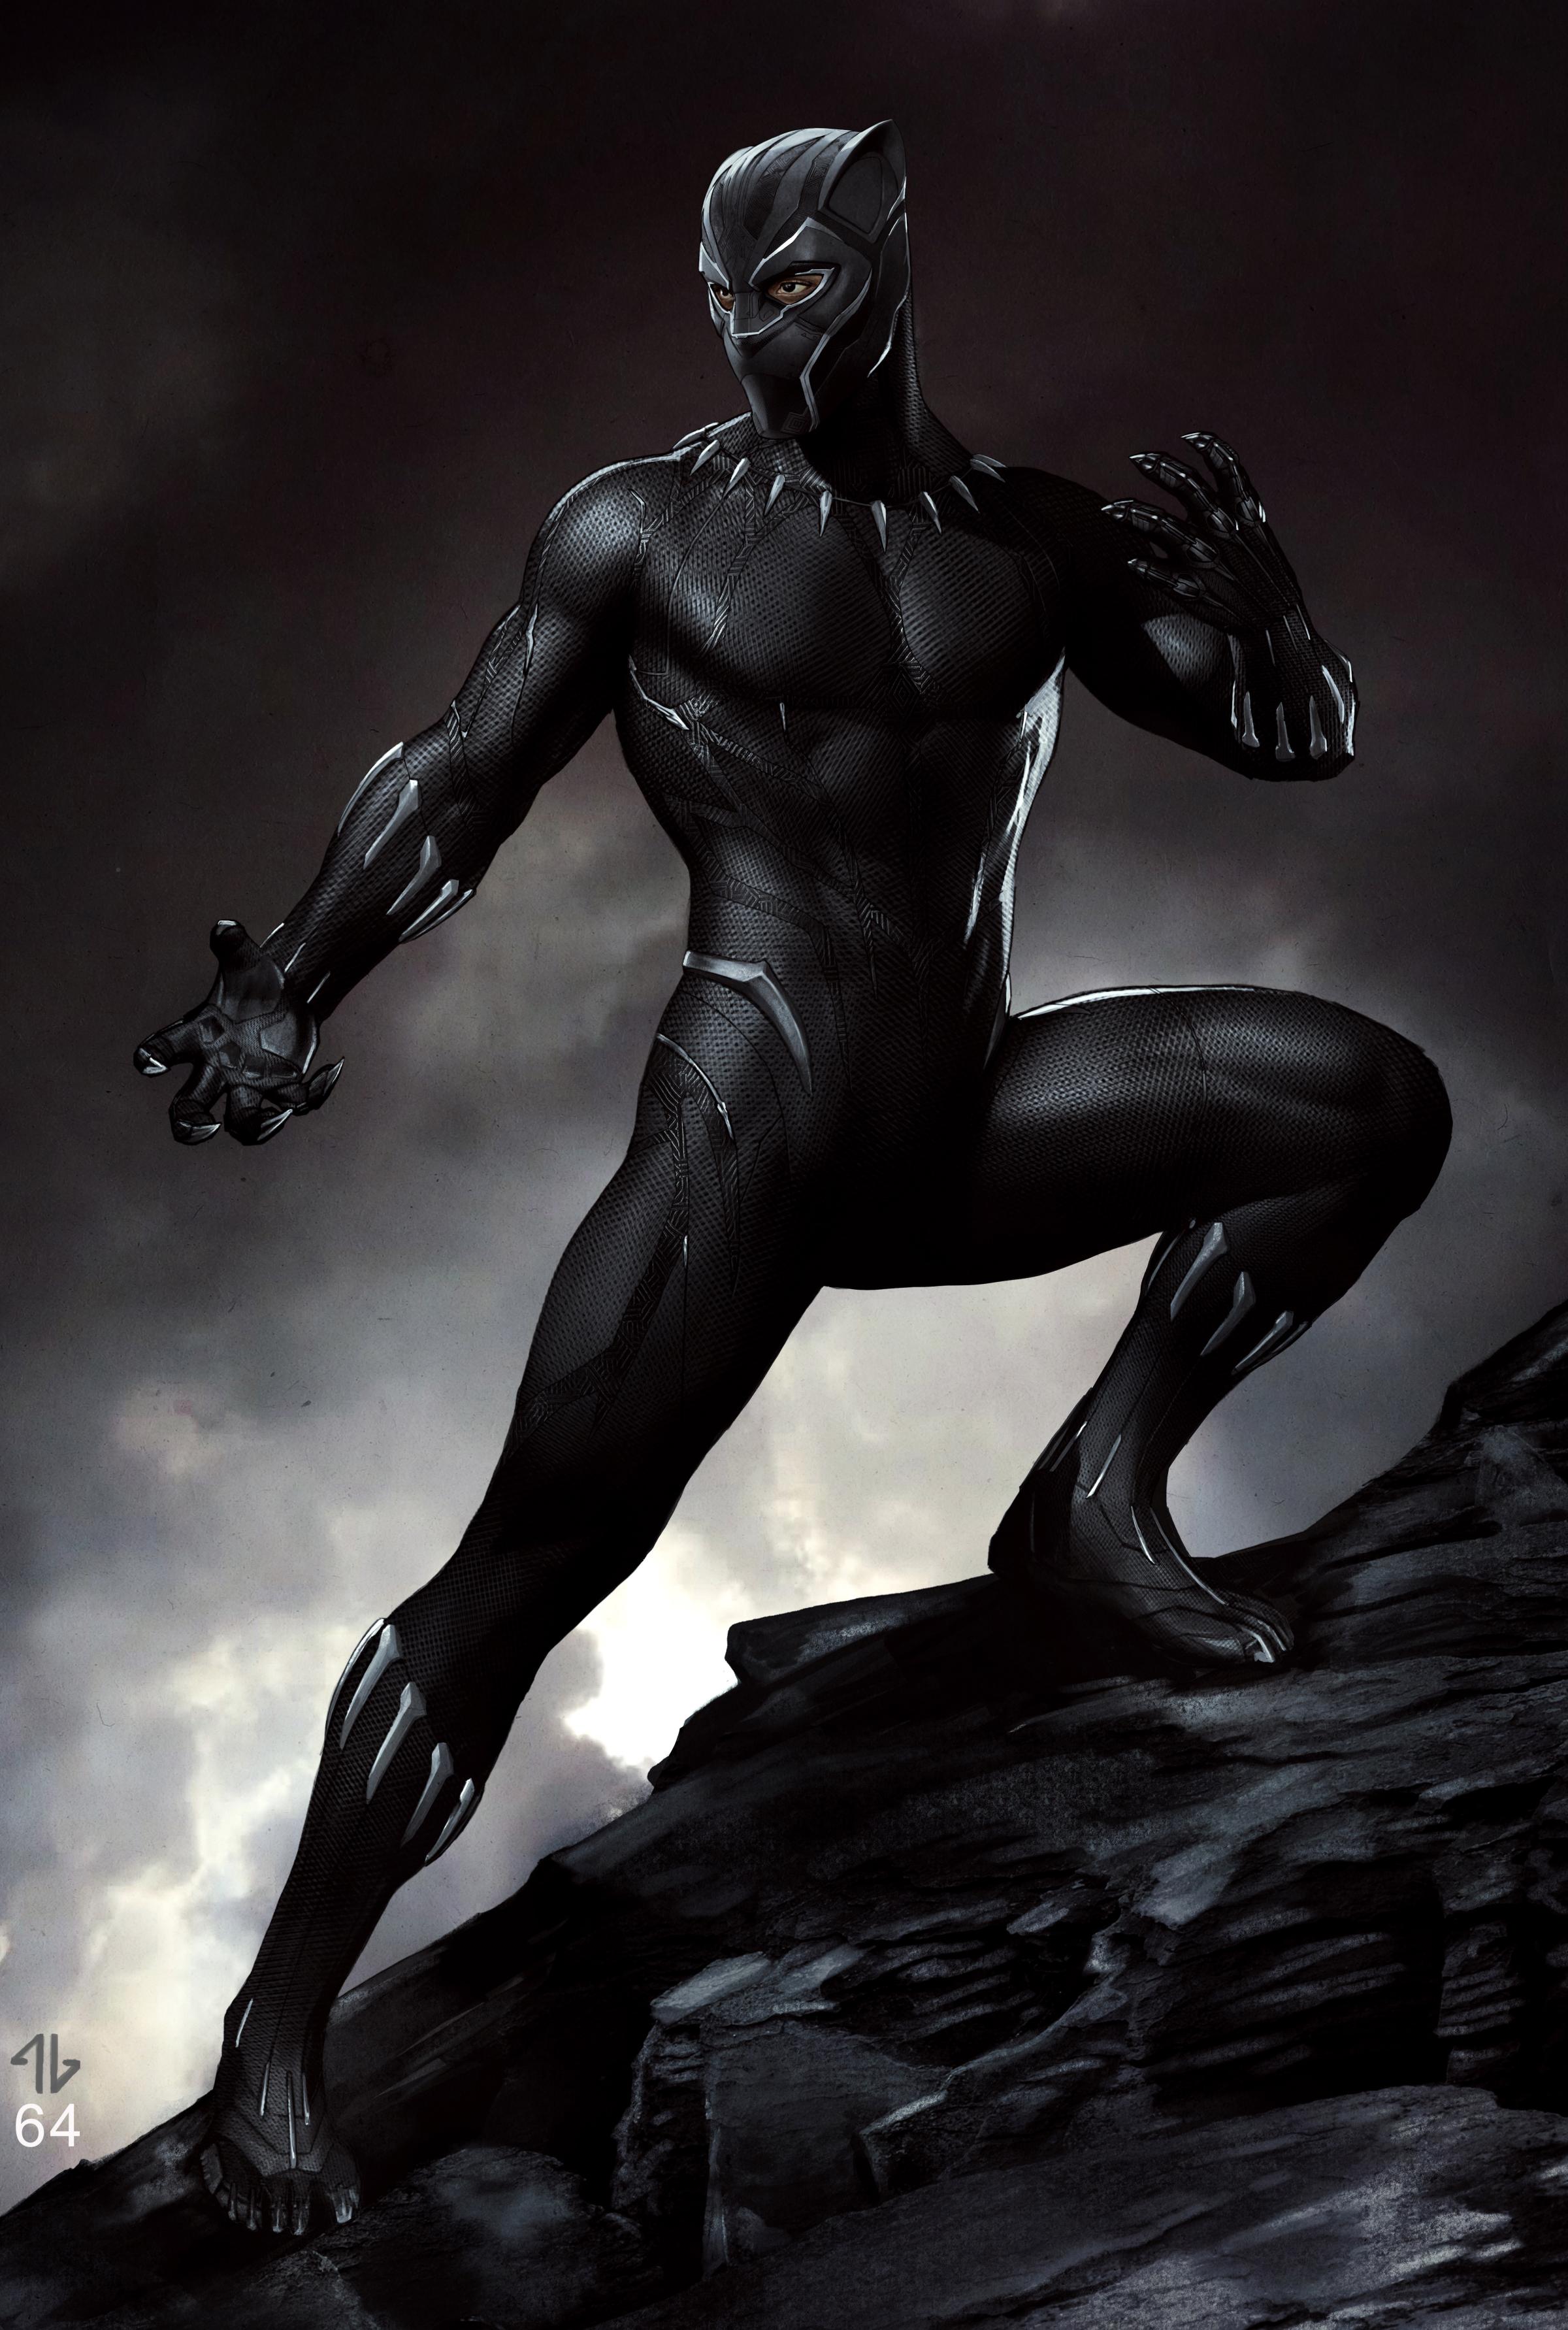 Marvel Studios' BLACK PANTHERBlack Panther Conceptual Character and Costume Design SketchCostume Design and Art: Ryan Meinderding and VisDev Team©Marvel Studios 2018